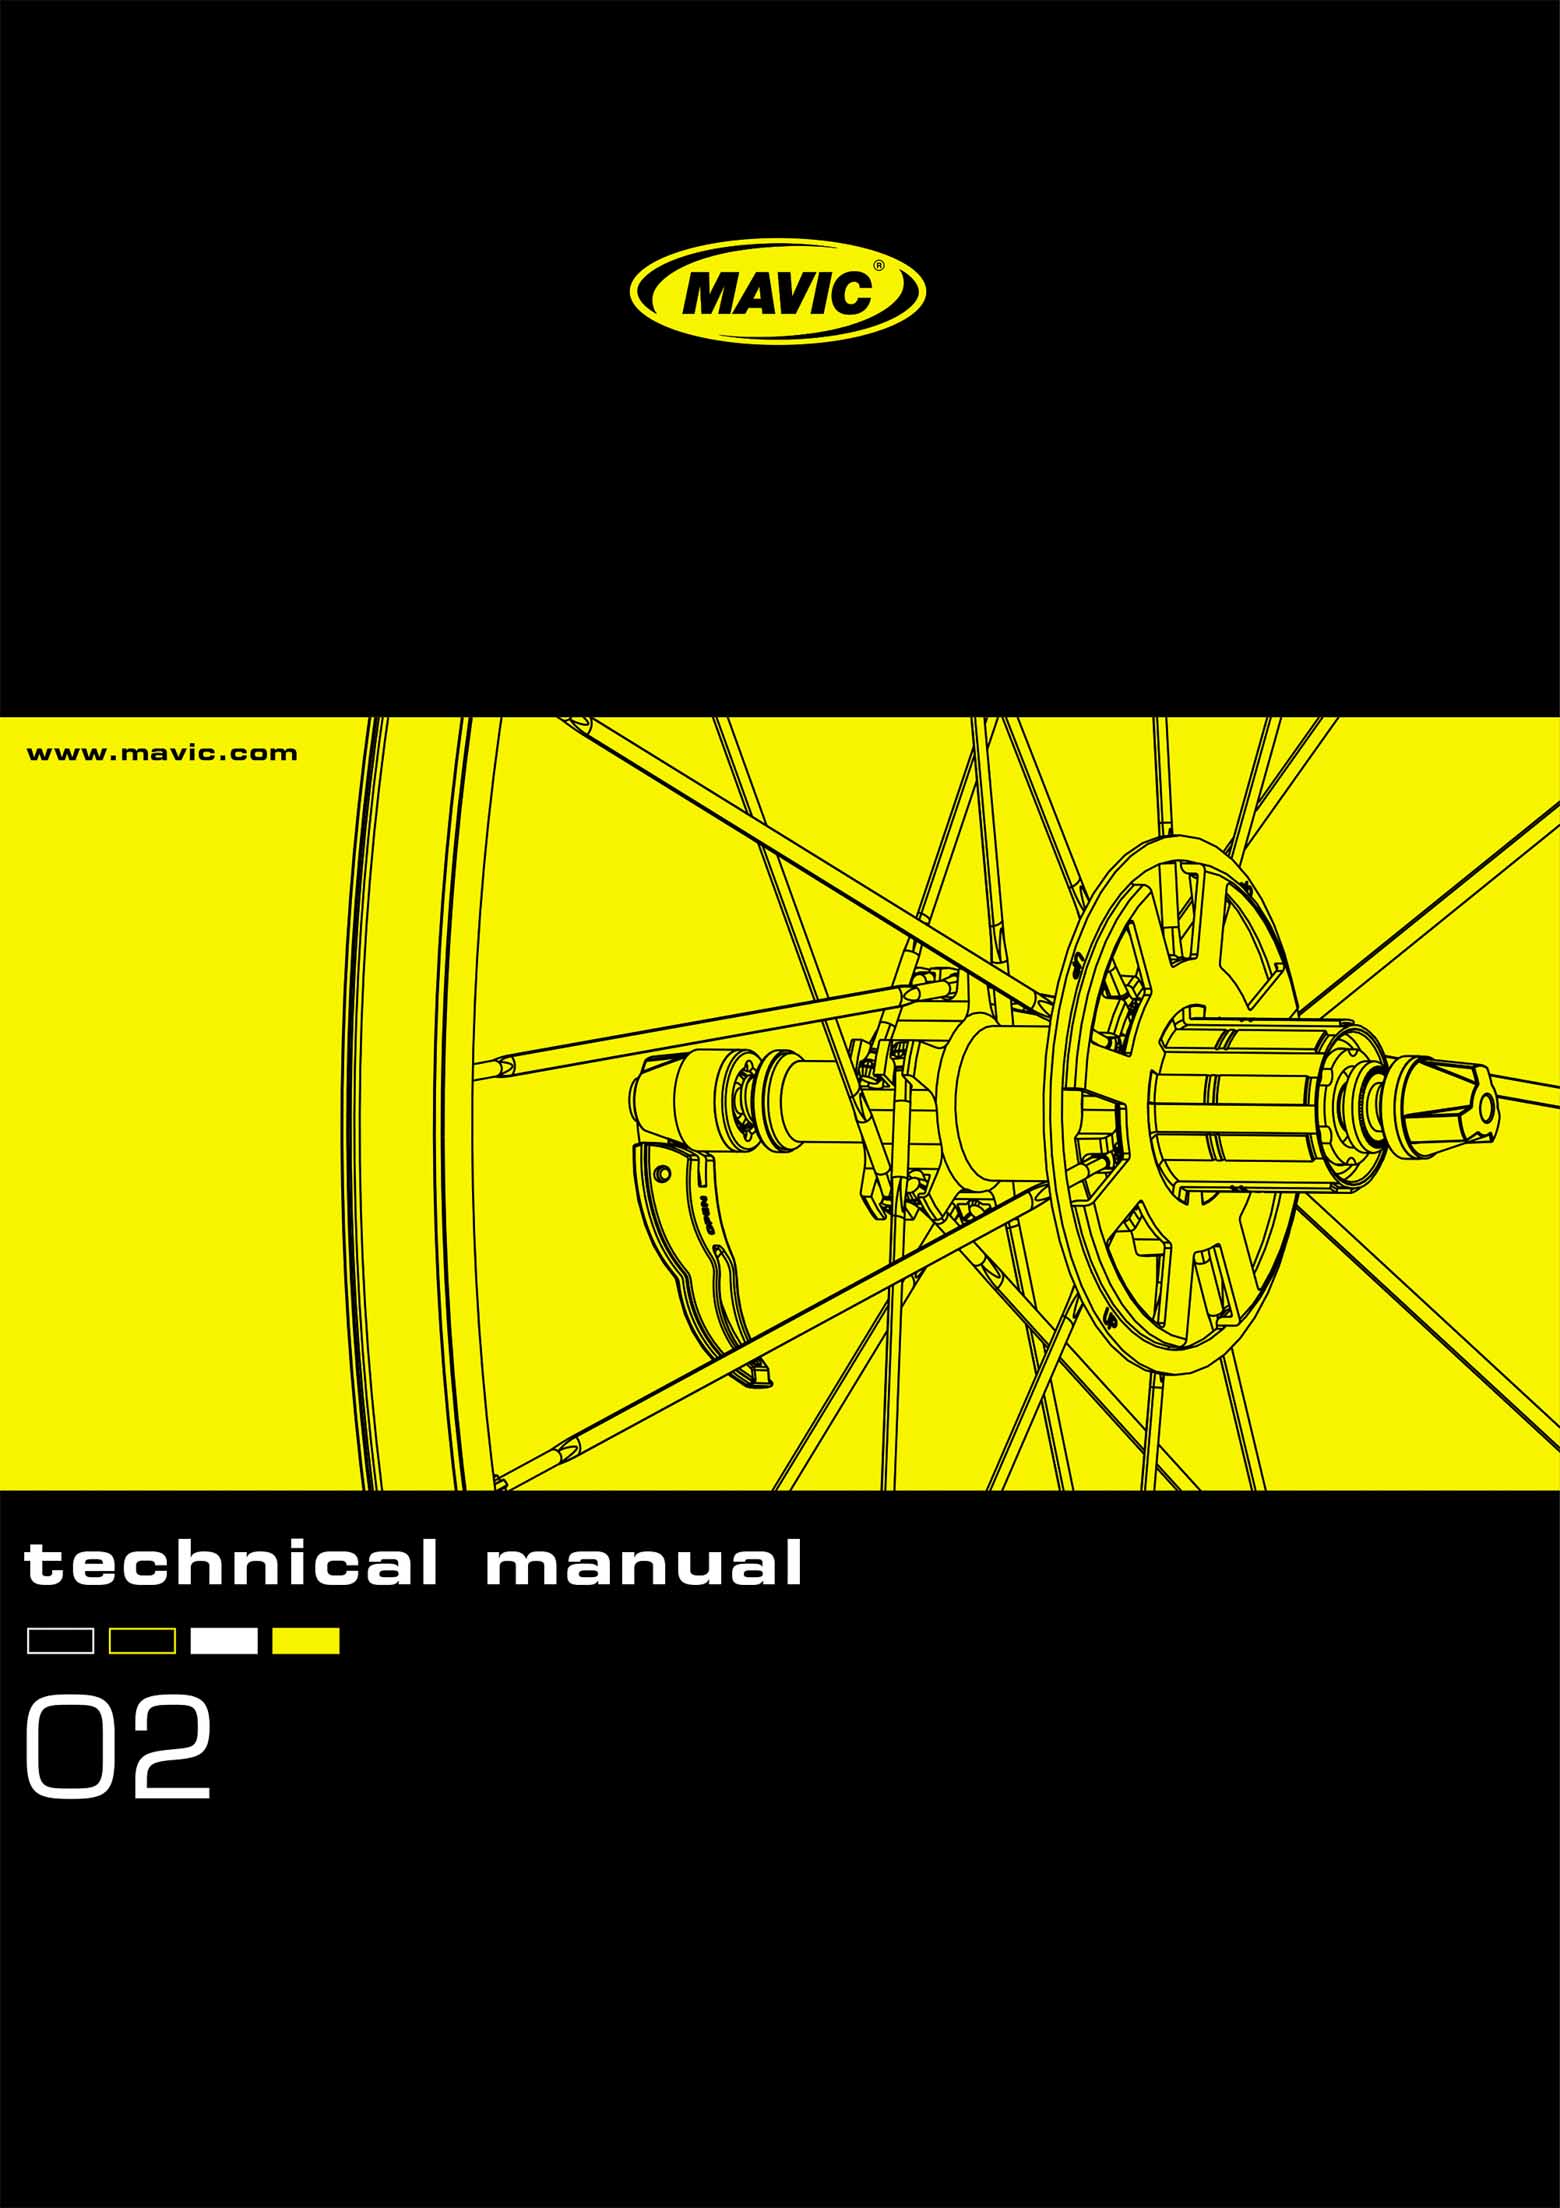 MAVIC - technical manual 02 page 001 main image